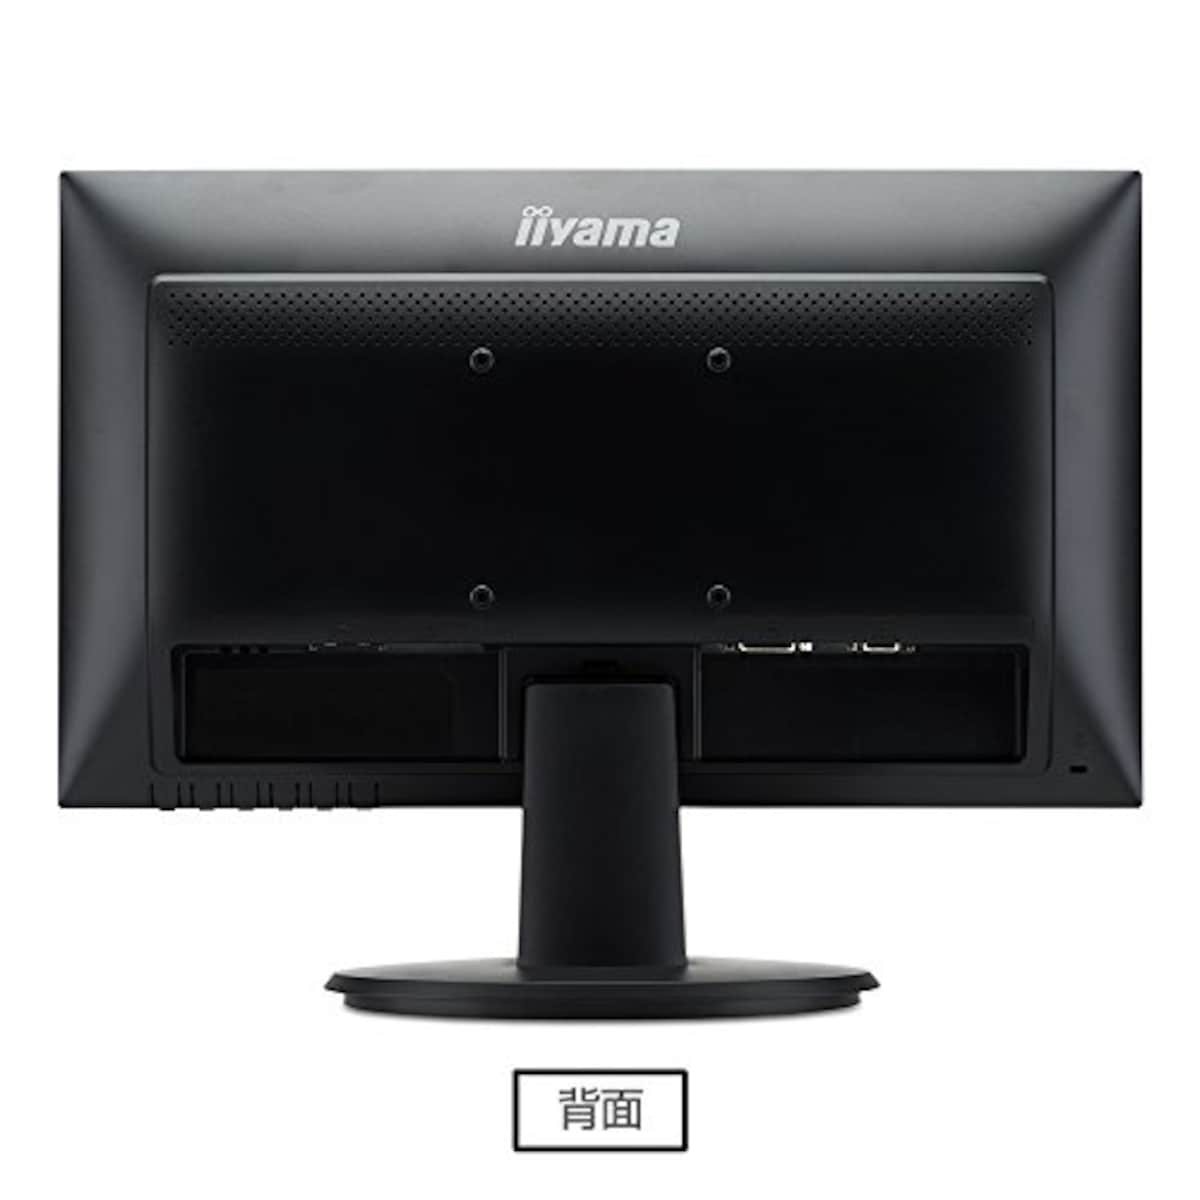  iiyama モニター ディスプレイ E2083HSD-B2 (19.5インチ/HD+/TN/D-sub,DVI-D/3年保証)画像2 